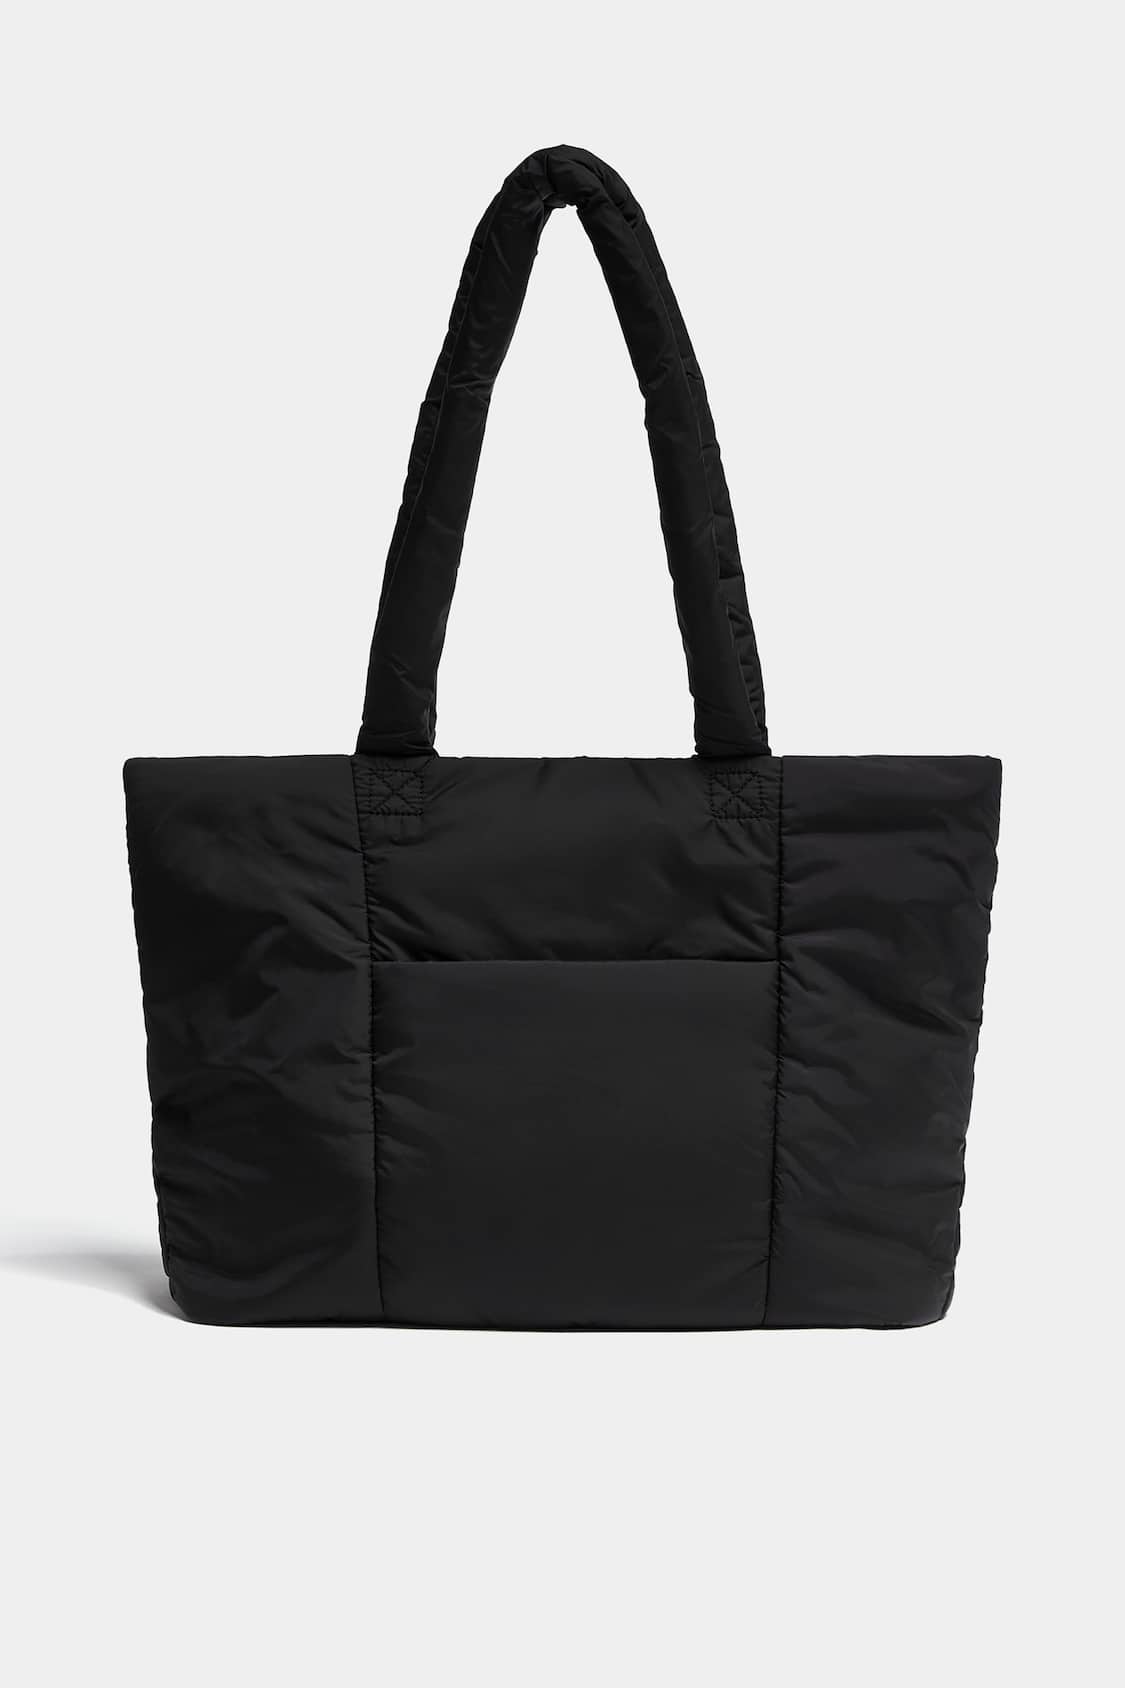 Zipper Quilted Handbags, Bags